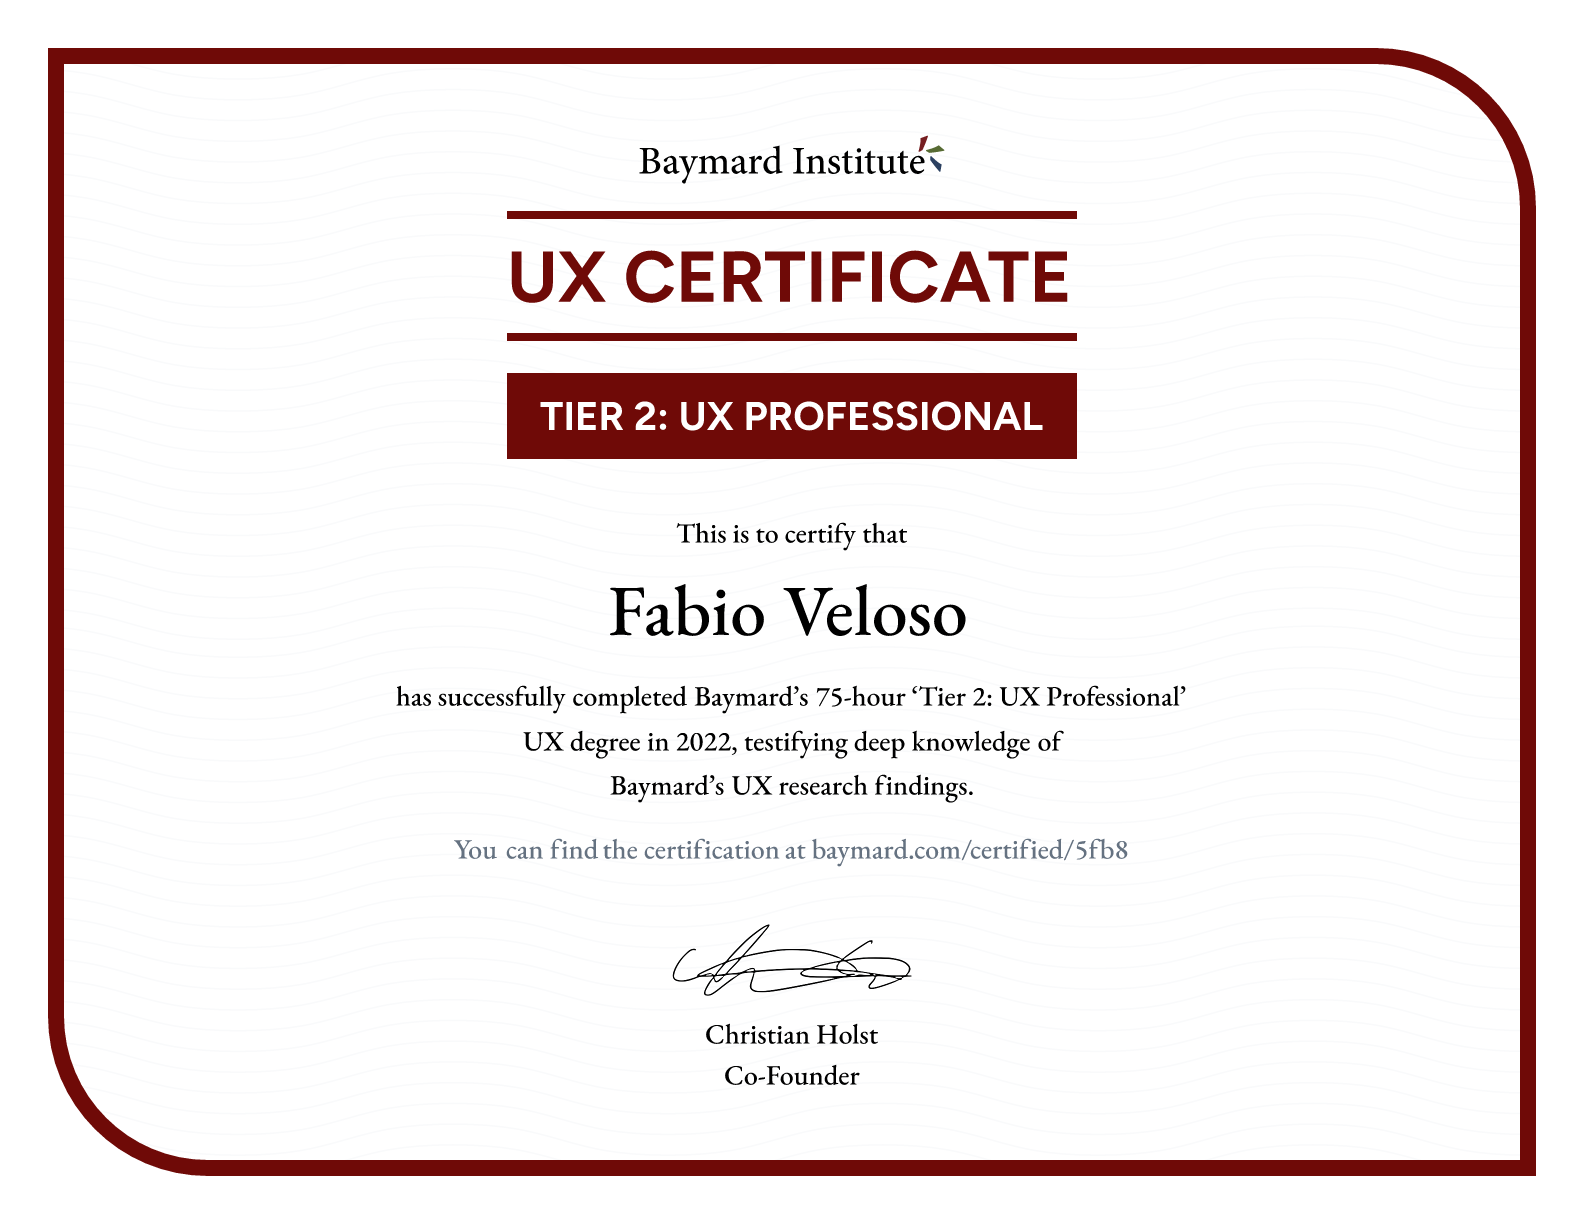 Fabio Veloso’s certificate